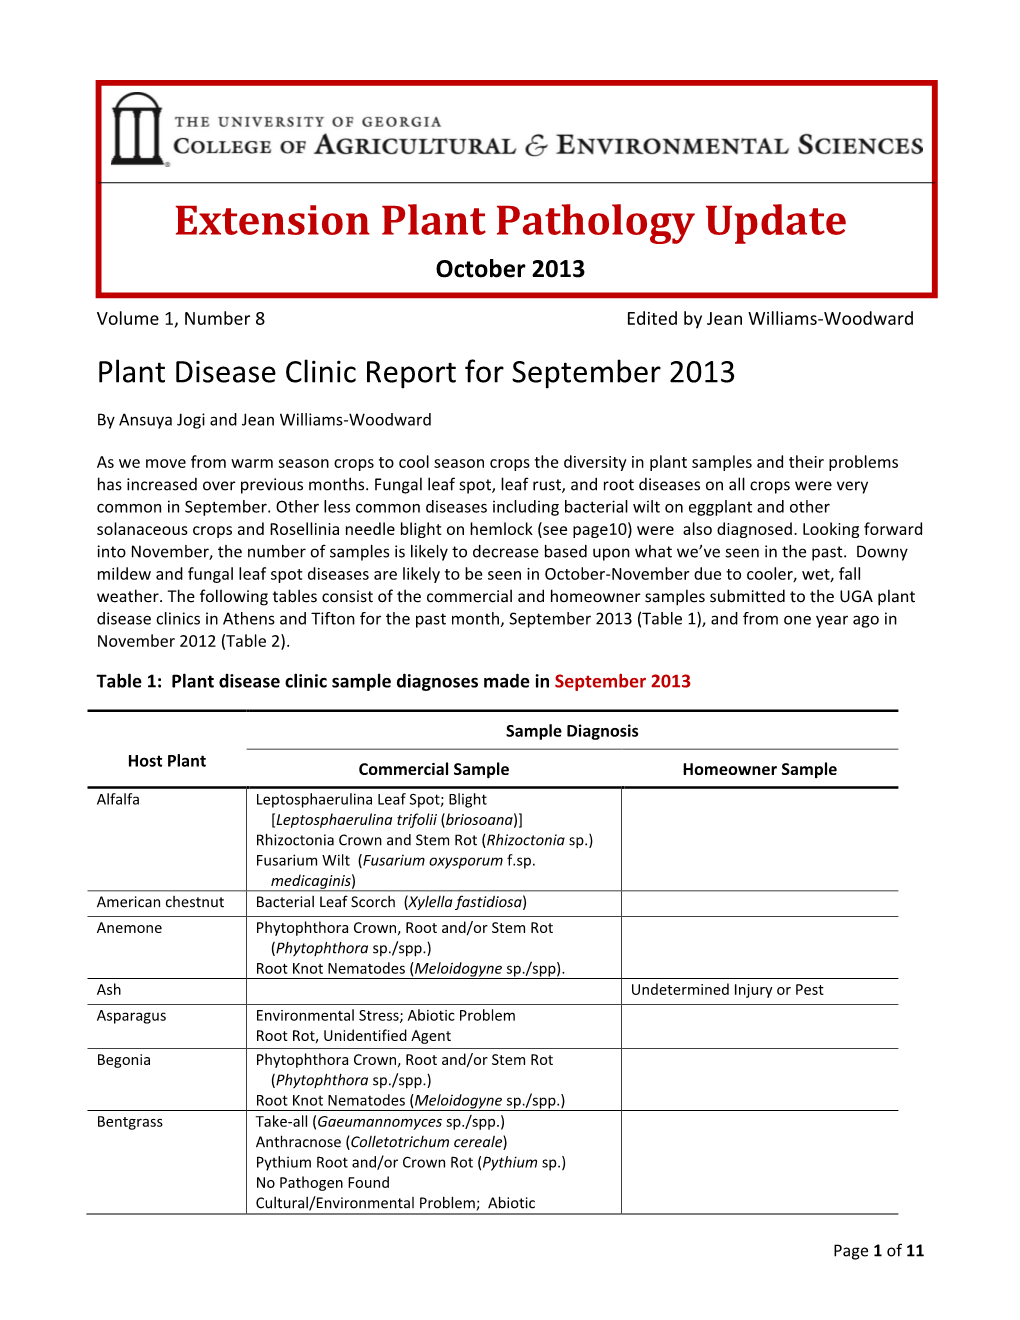 Extension Plant Pathology Update October 2013